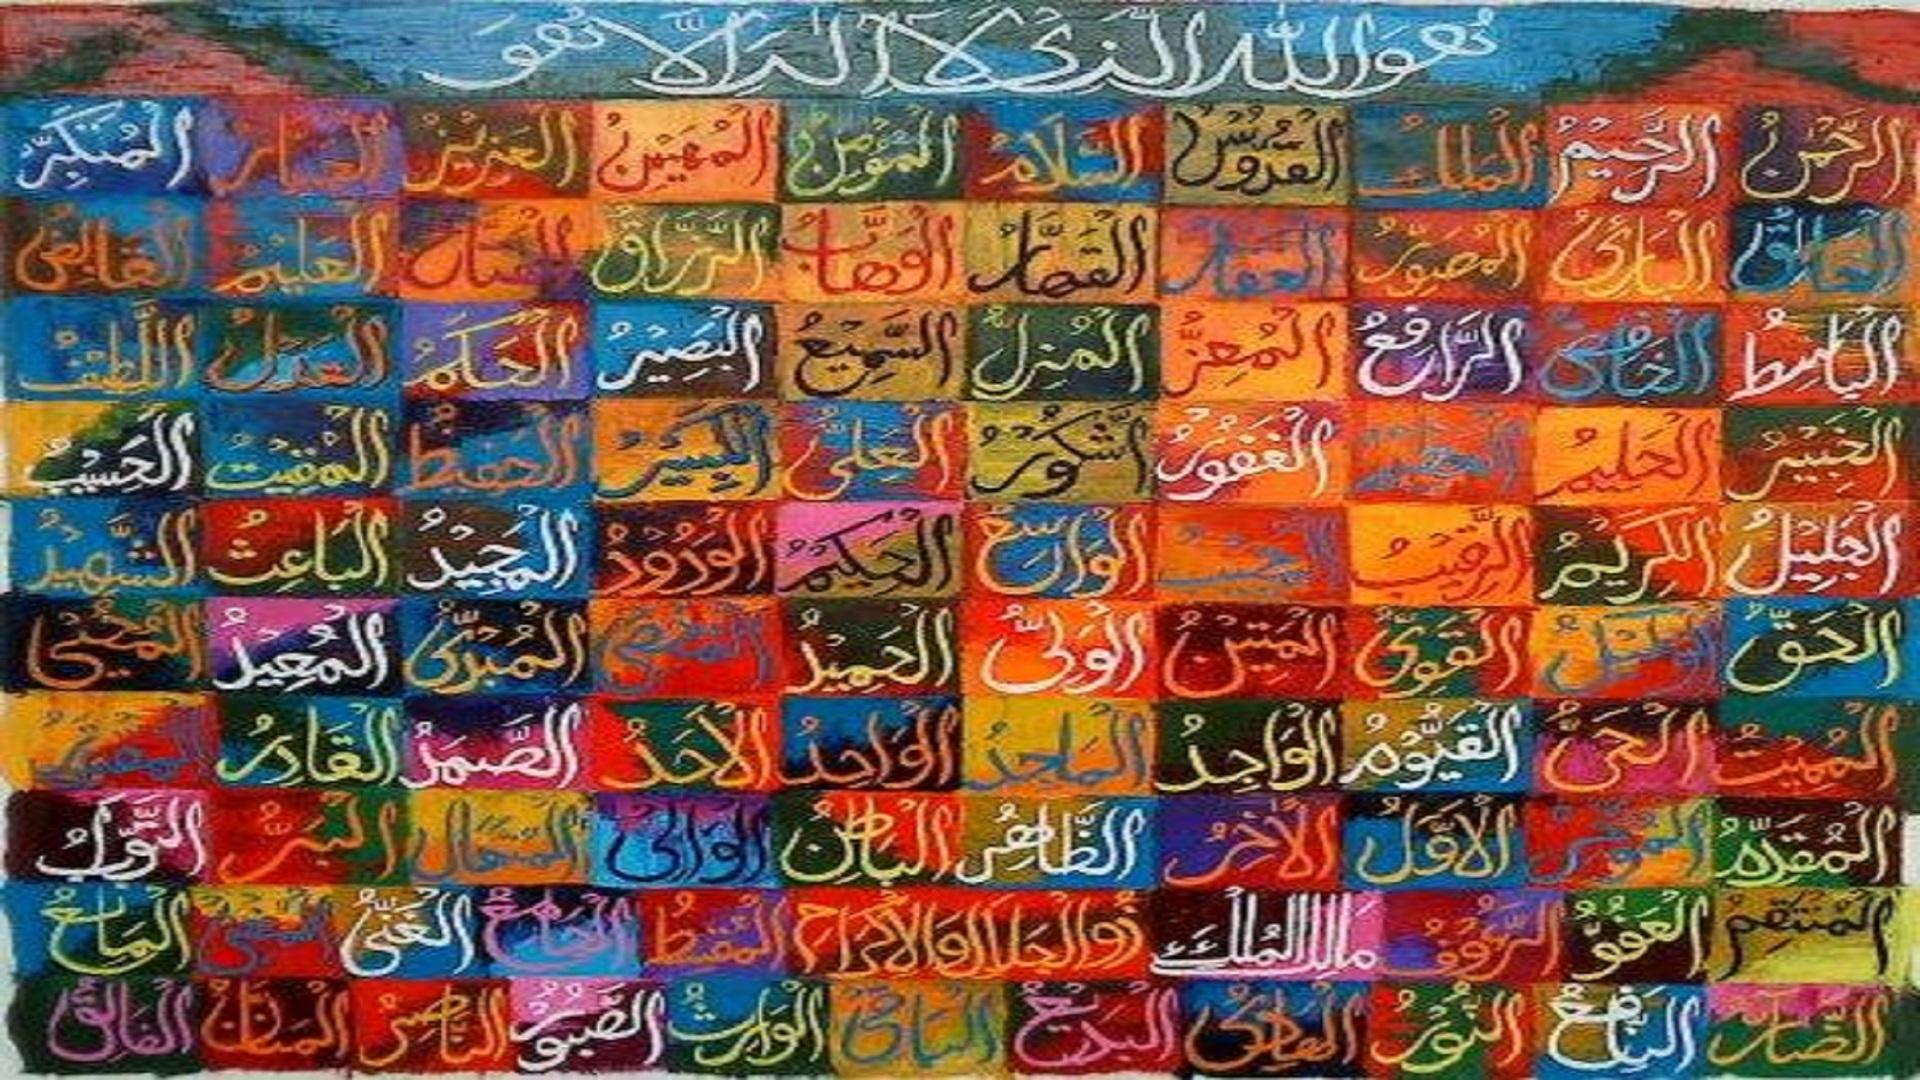 99 Names Of Allah Wallpaper Free Download - 99 Names Of Allah Painting , HD Wallpaper & Backgrounds